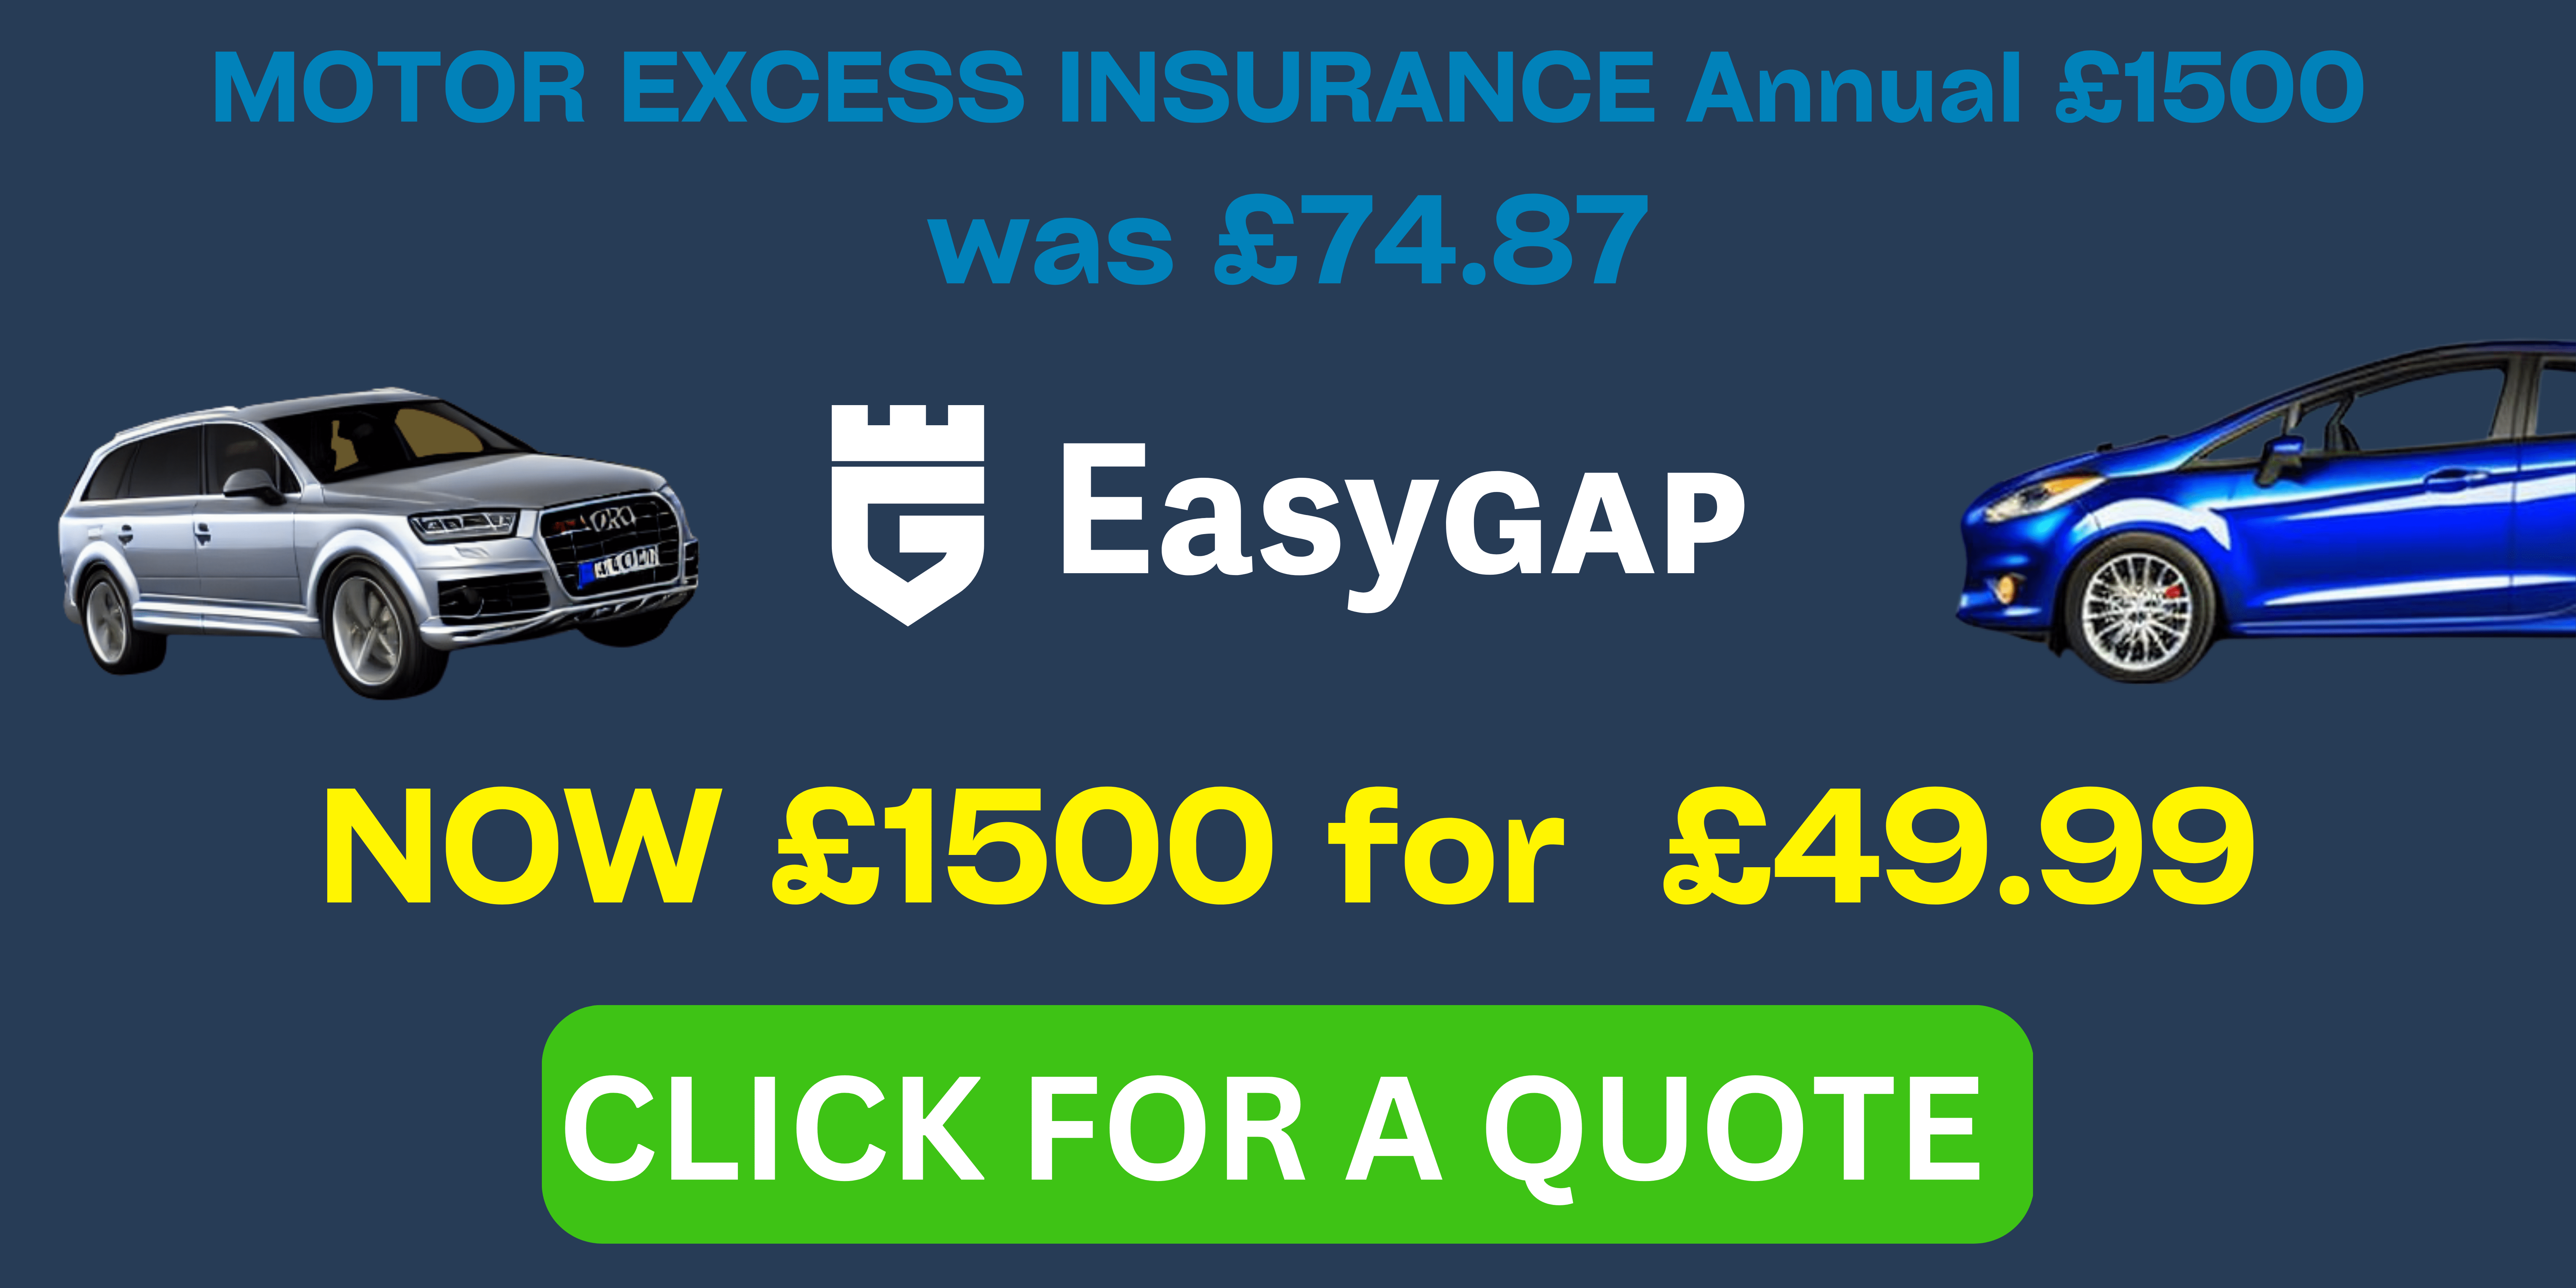 best motor excess insurance £1500